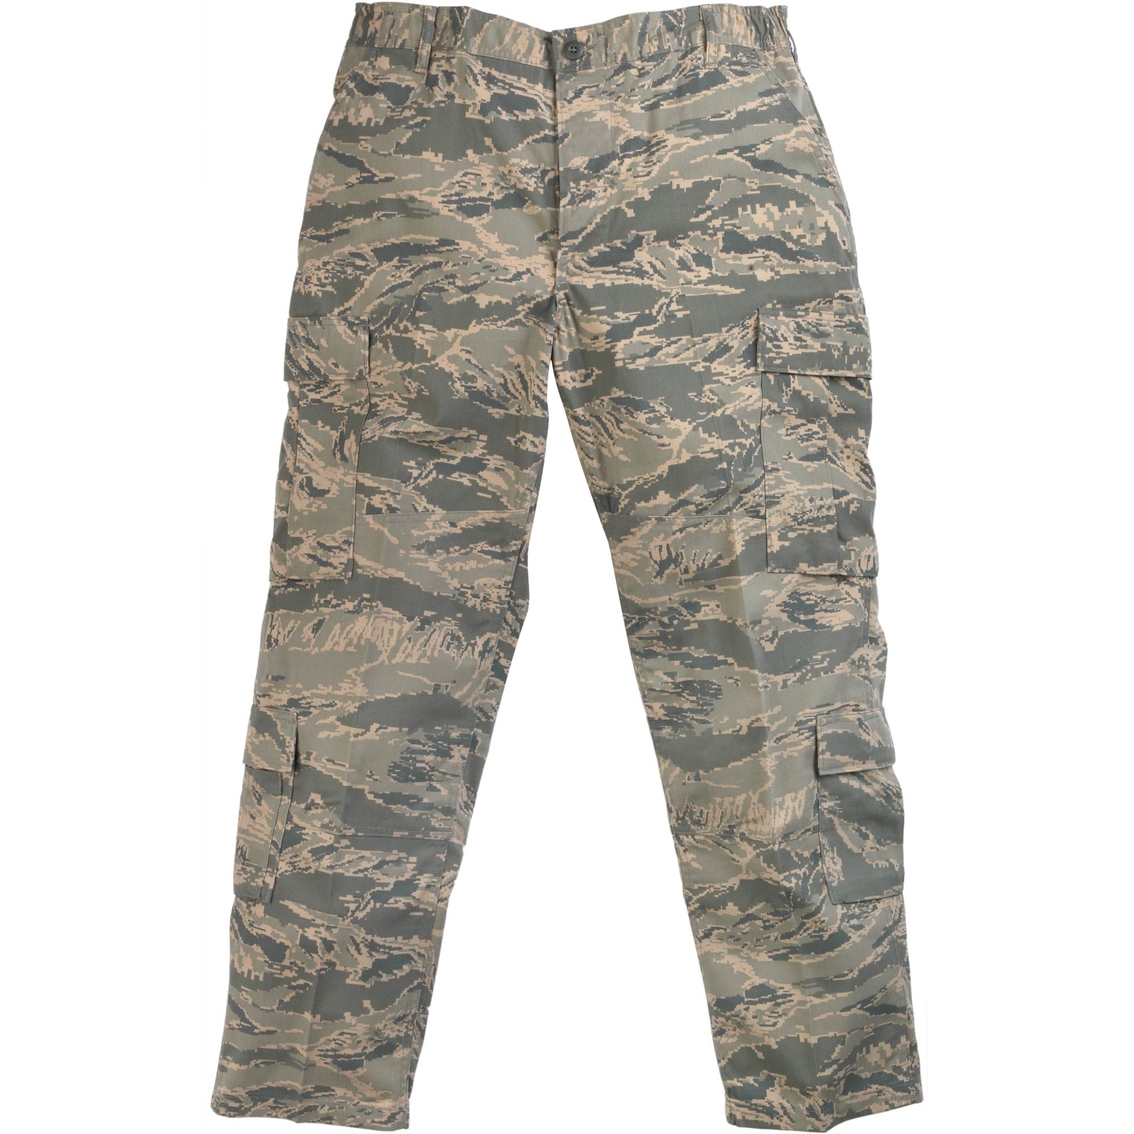 Dlats Air Force Men's Green Shade Abu Trousers | Pants | Military ...